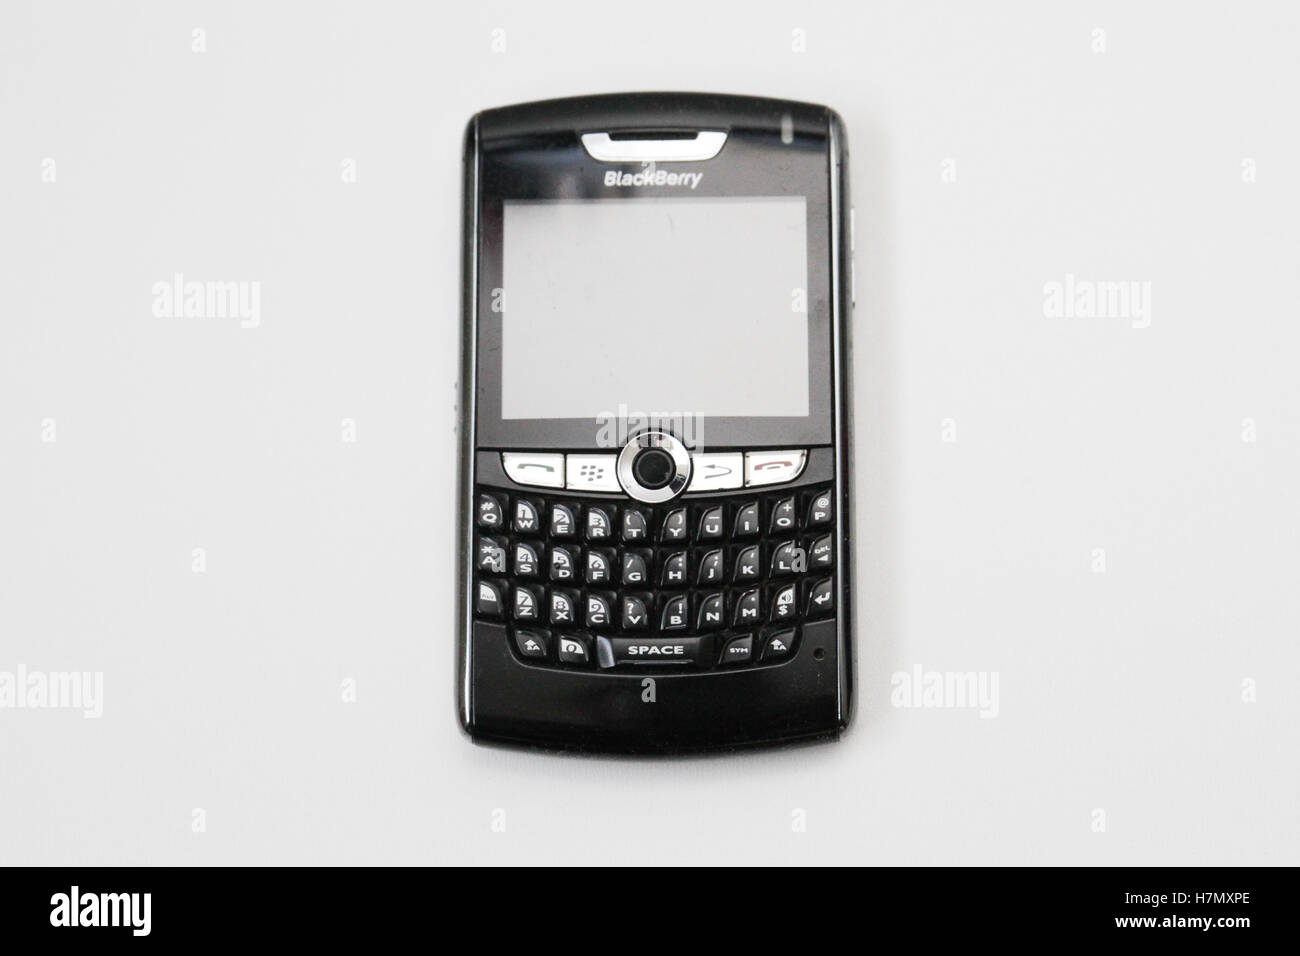 blackberry phone model 8800 Stock Photo